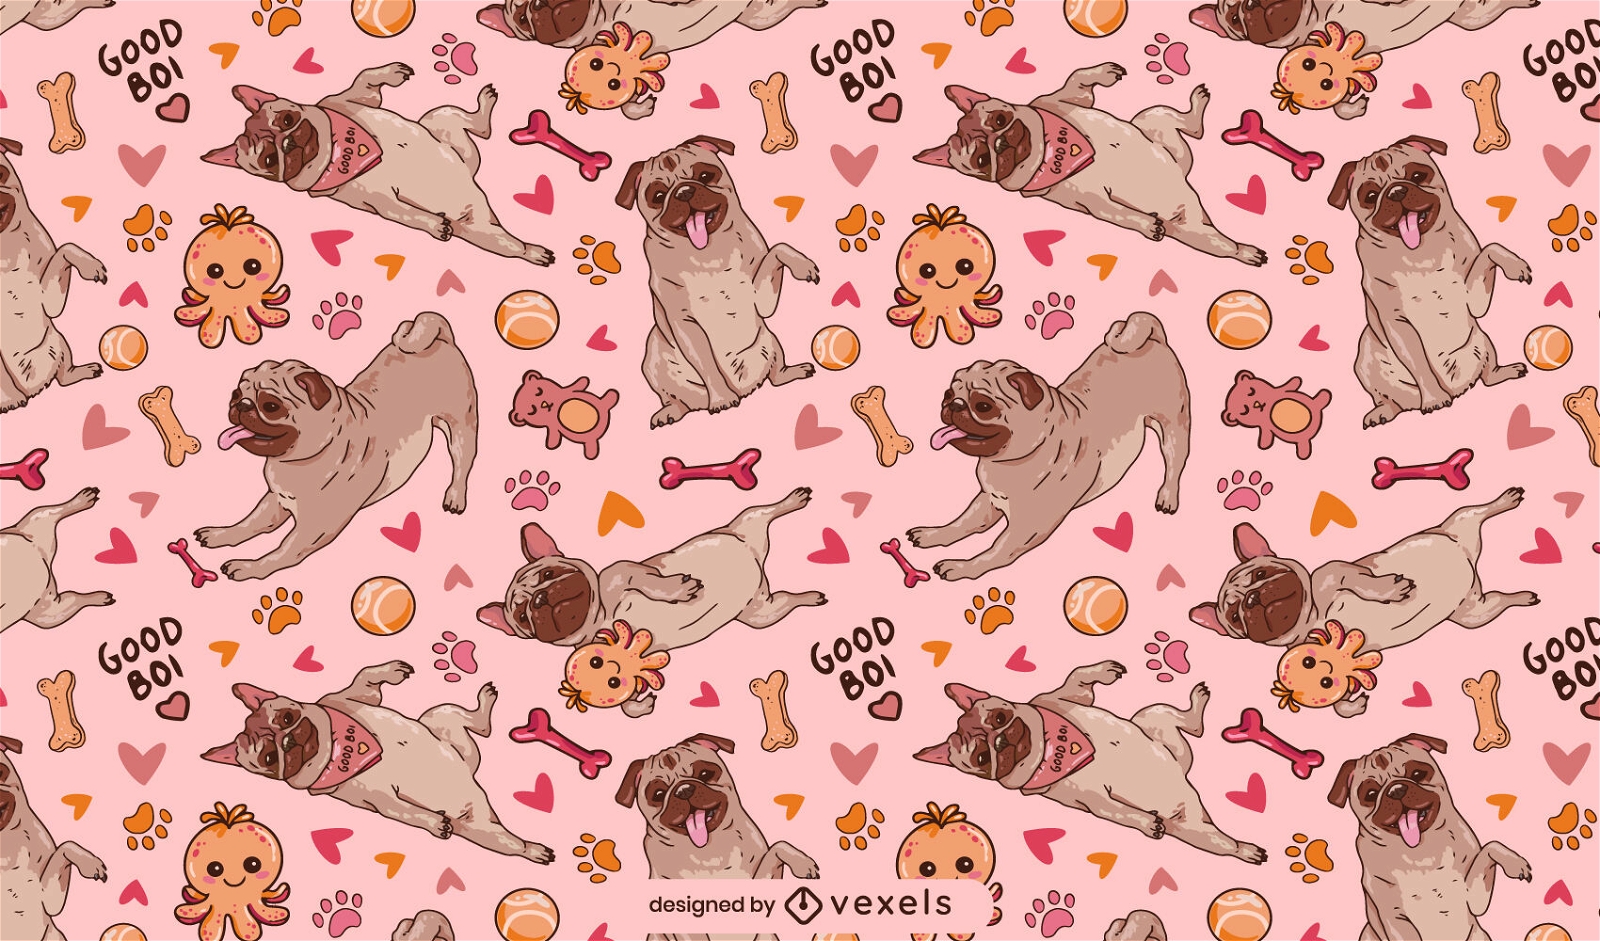 Awesome pug dog pattern design